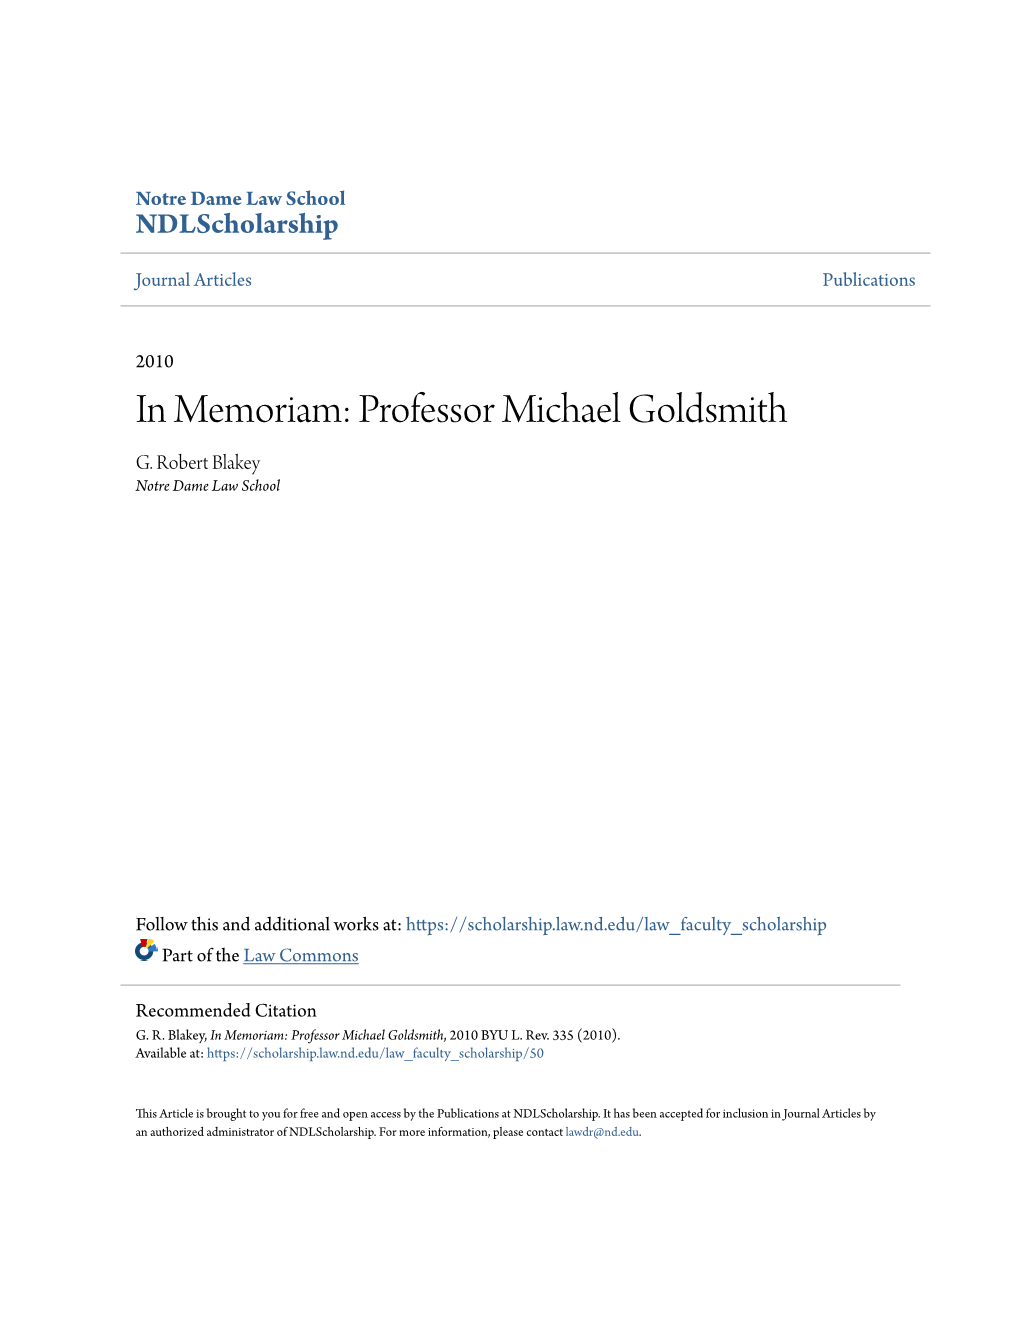 Professor Michael Goldsmith G